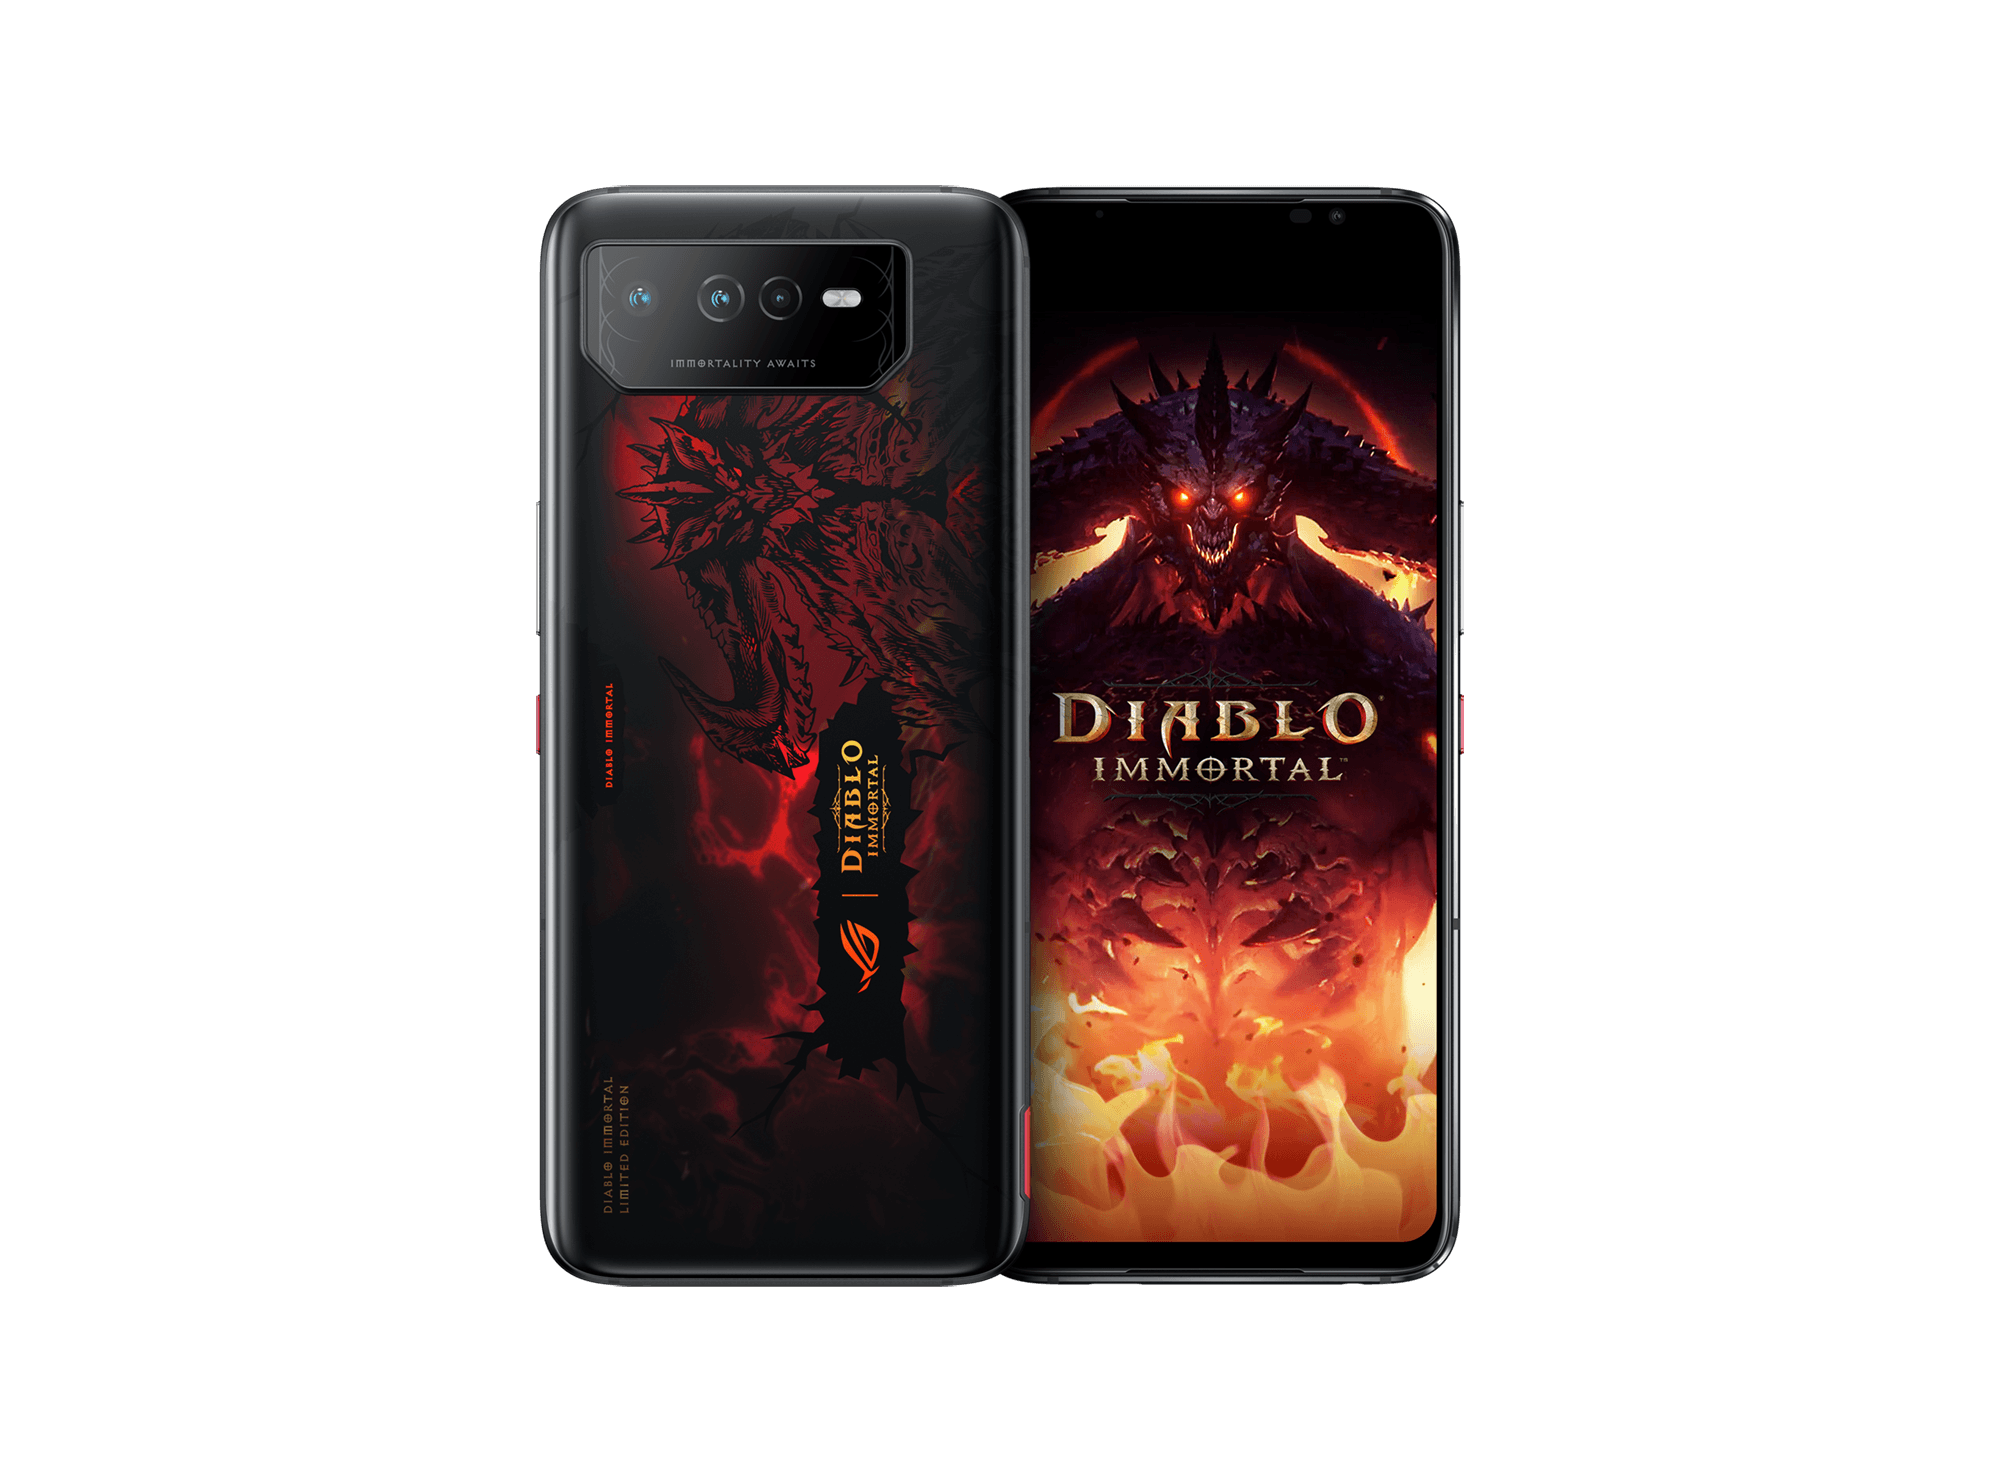 Asus ROG Phone 6 Diablo Immortal Edition (16/512GB) *Limited Edition*